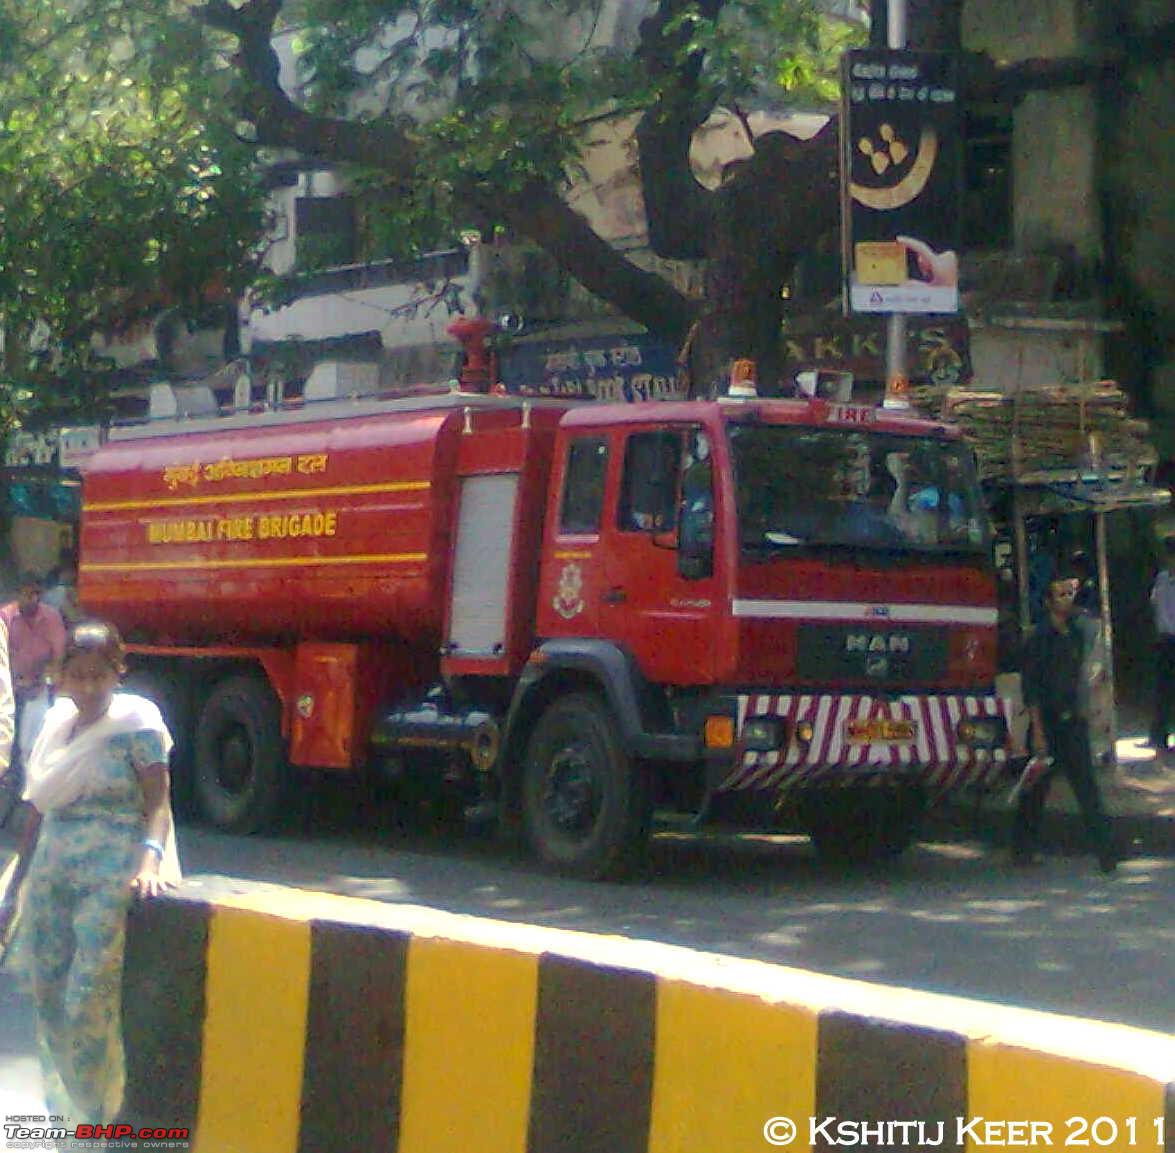 MAN Fire Truck in Mumbai